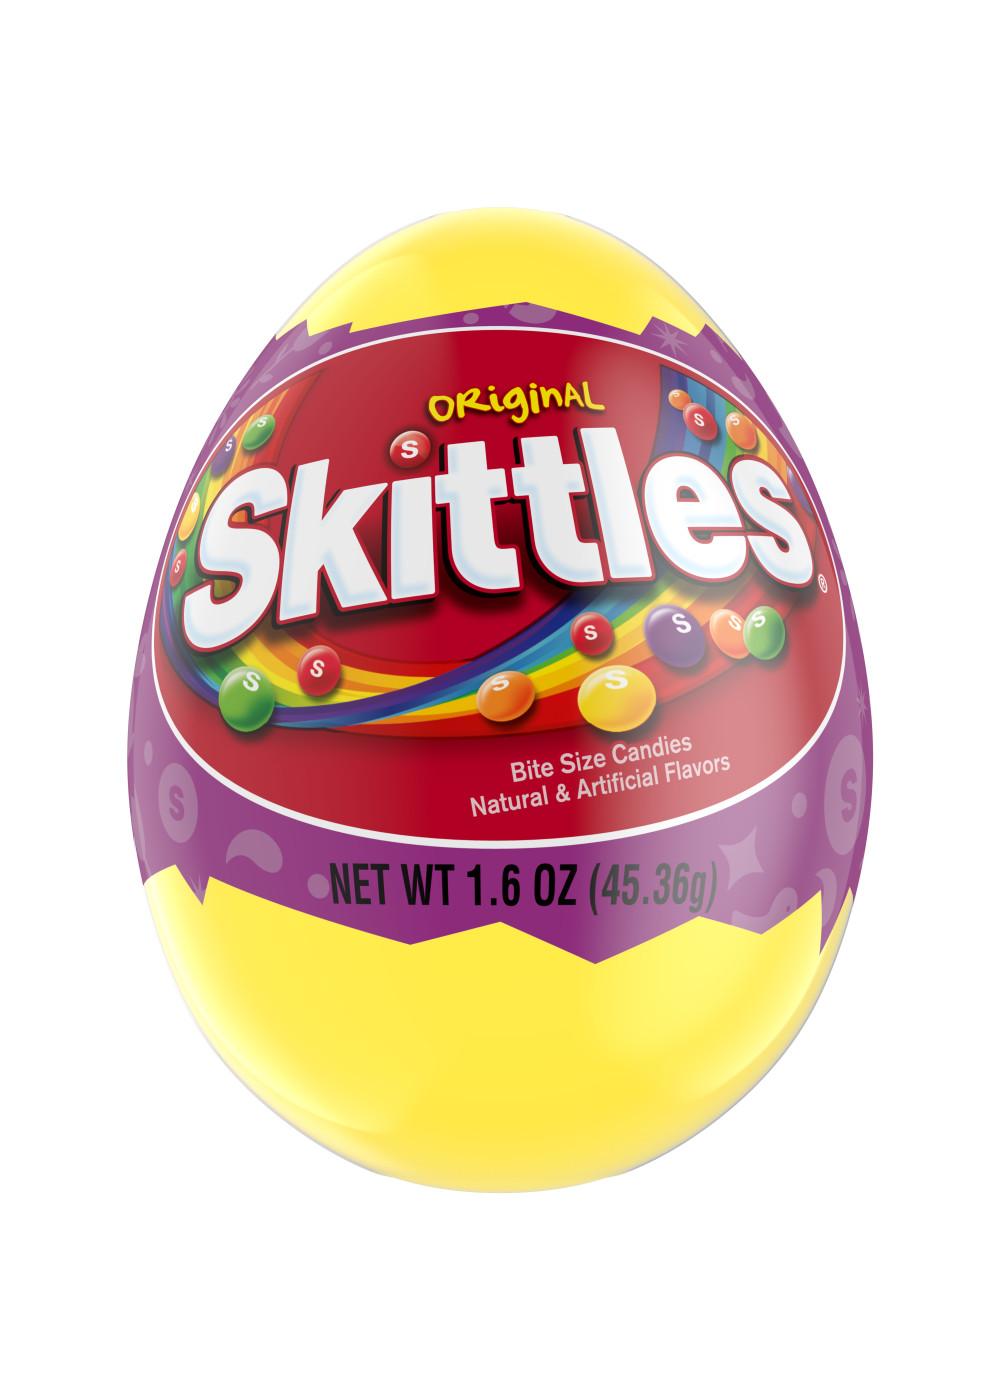 Skittles Original Candy Easter Egg; image 1 of 7